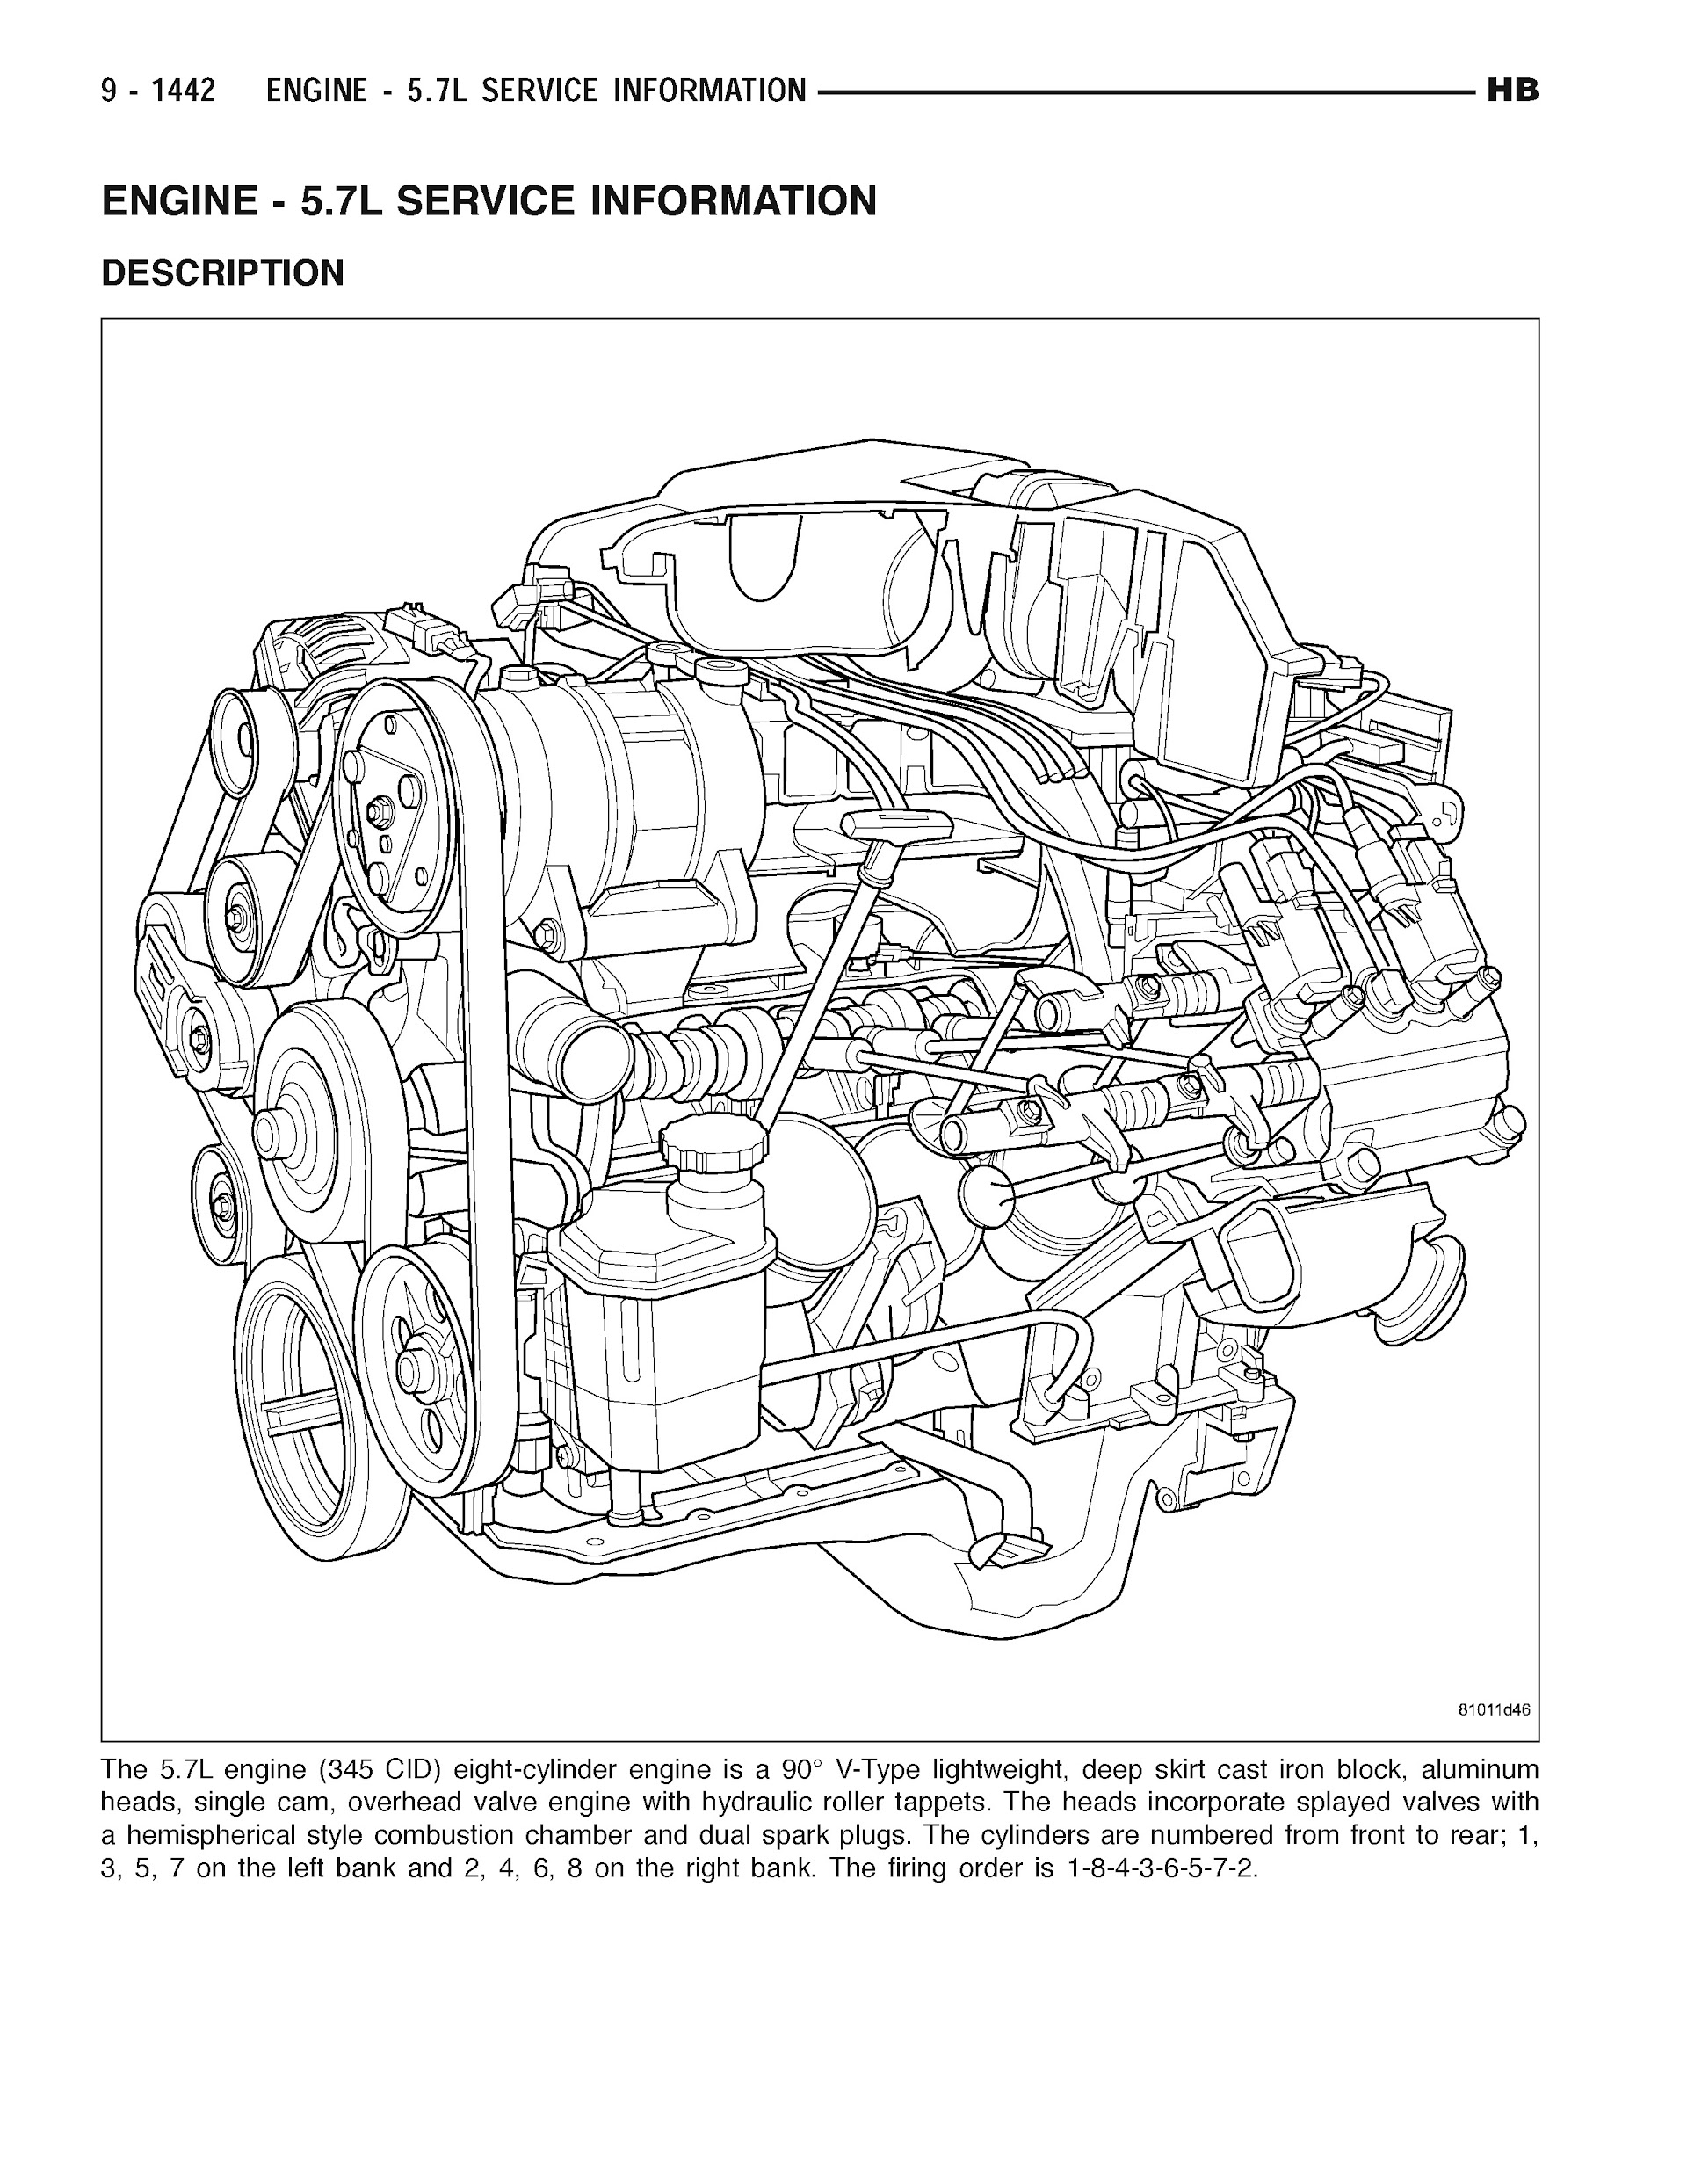 2004-2006 Dodge Durango Repair Manual, Engine 5.7L Service Information